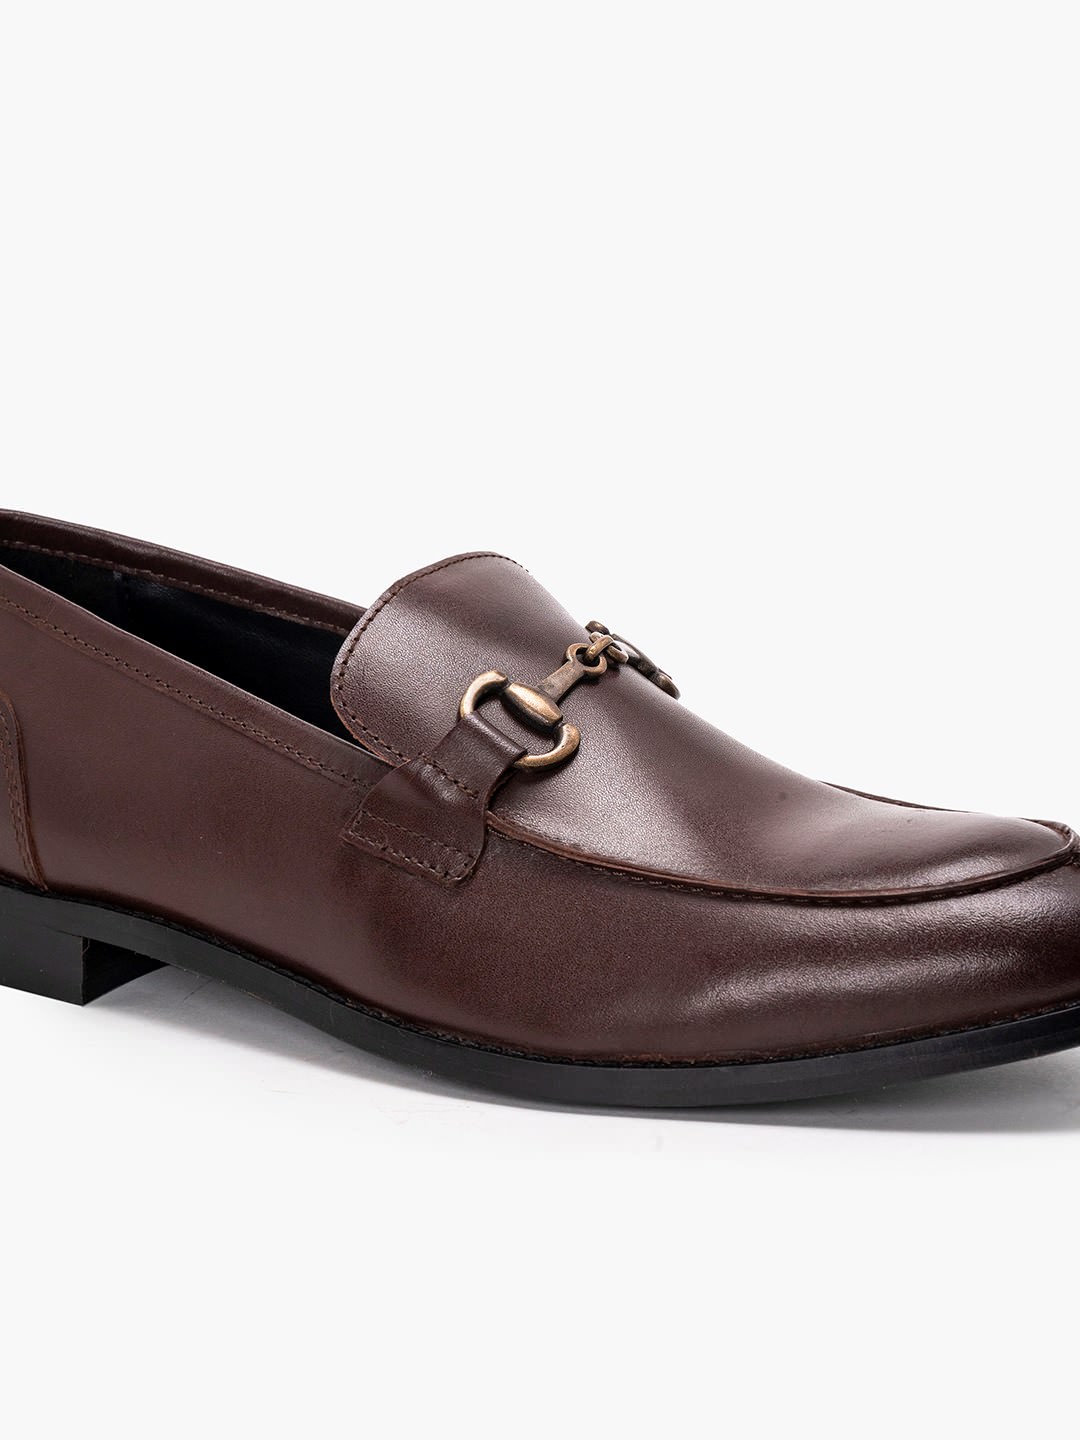 Buy Online Genuine Leather Burgundy Loafers For Men